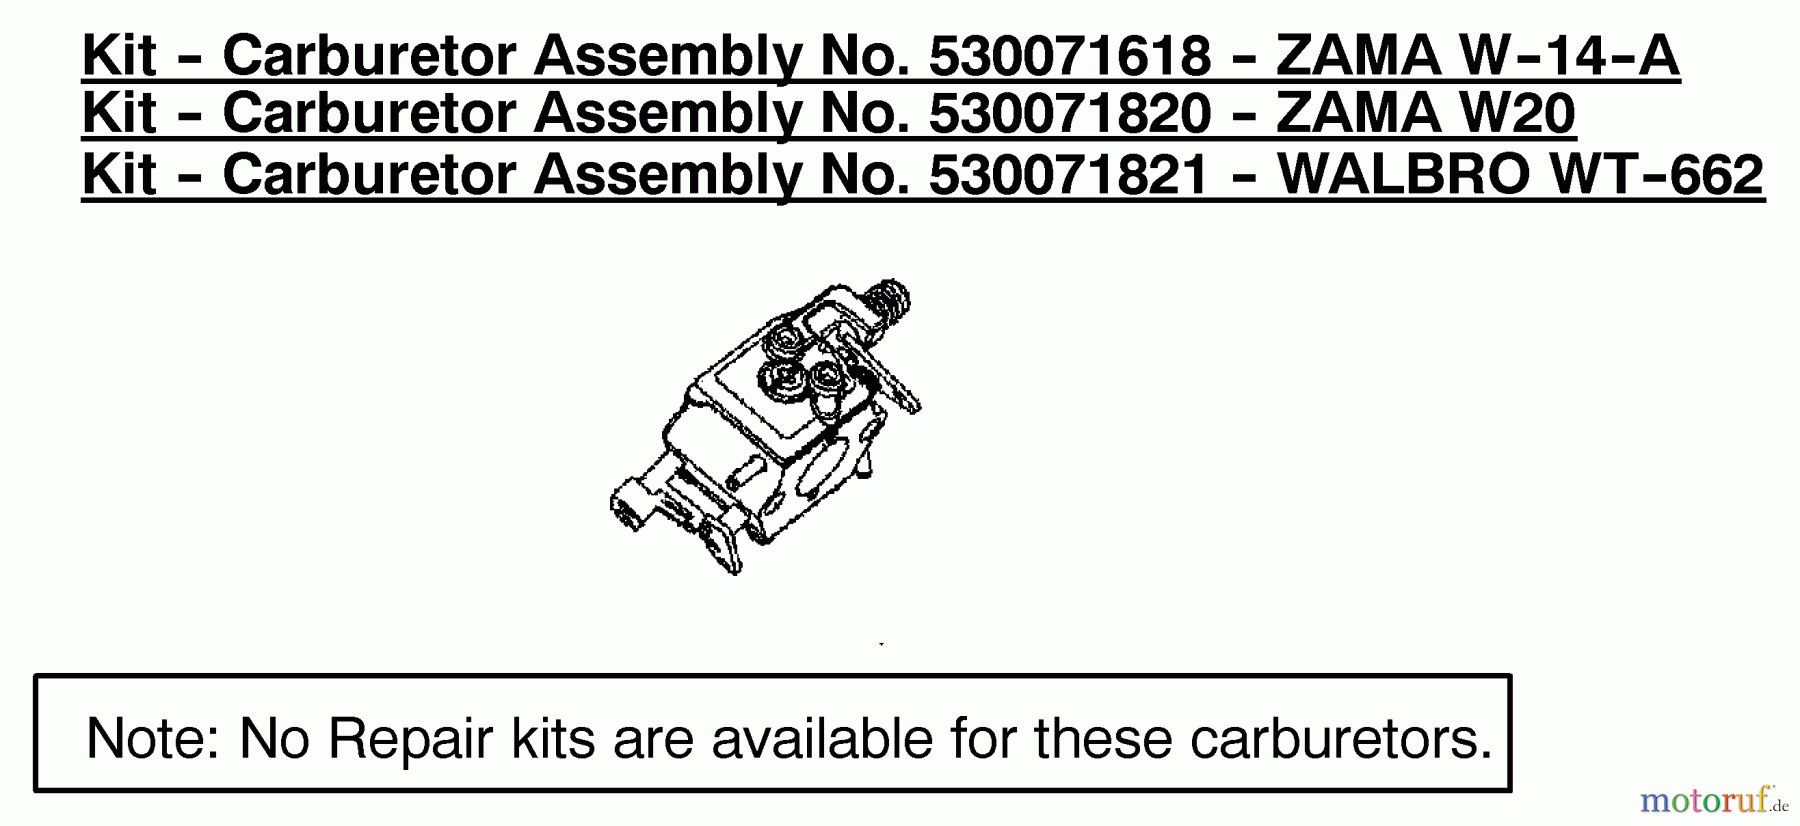  Poulan / Weed Eater Motorsägen 1975 (Type 5) - Poulan Woodshark Chainsaw Carburetor Assembly (Zama W-14-A) P/N 530071618